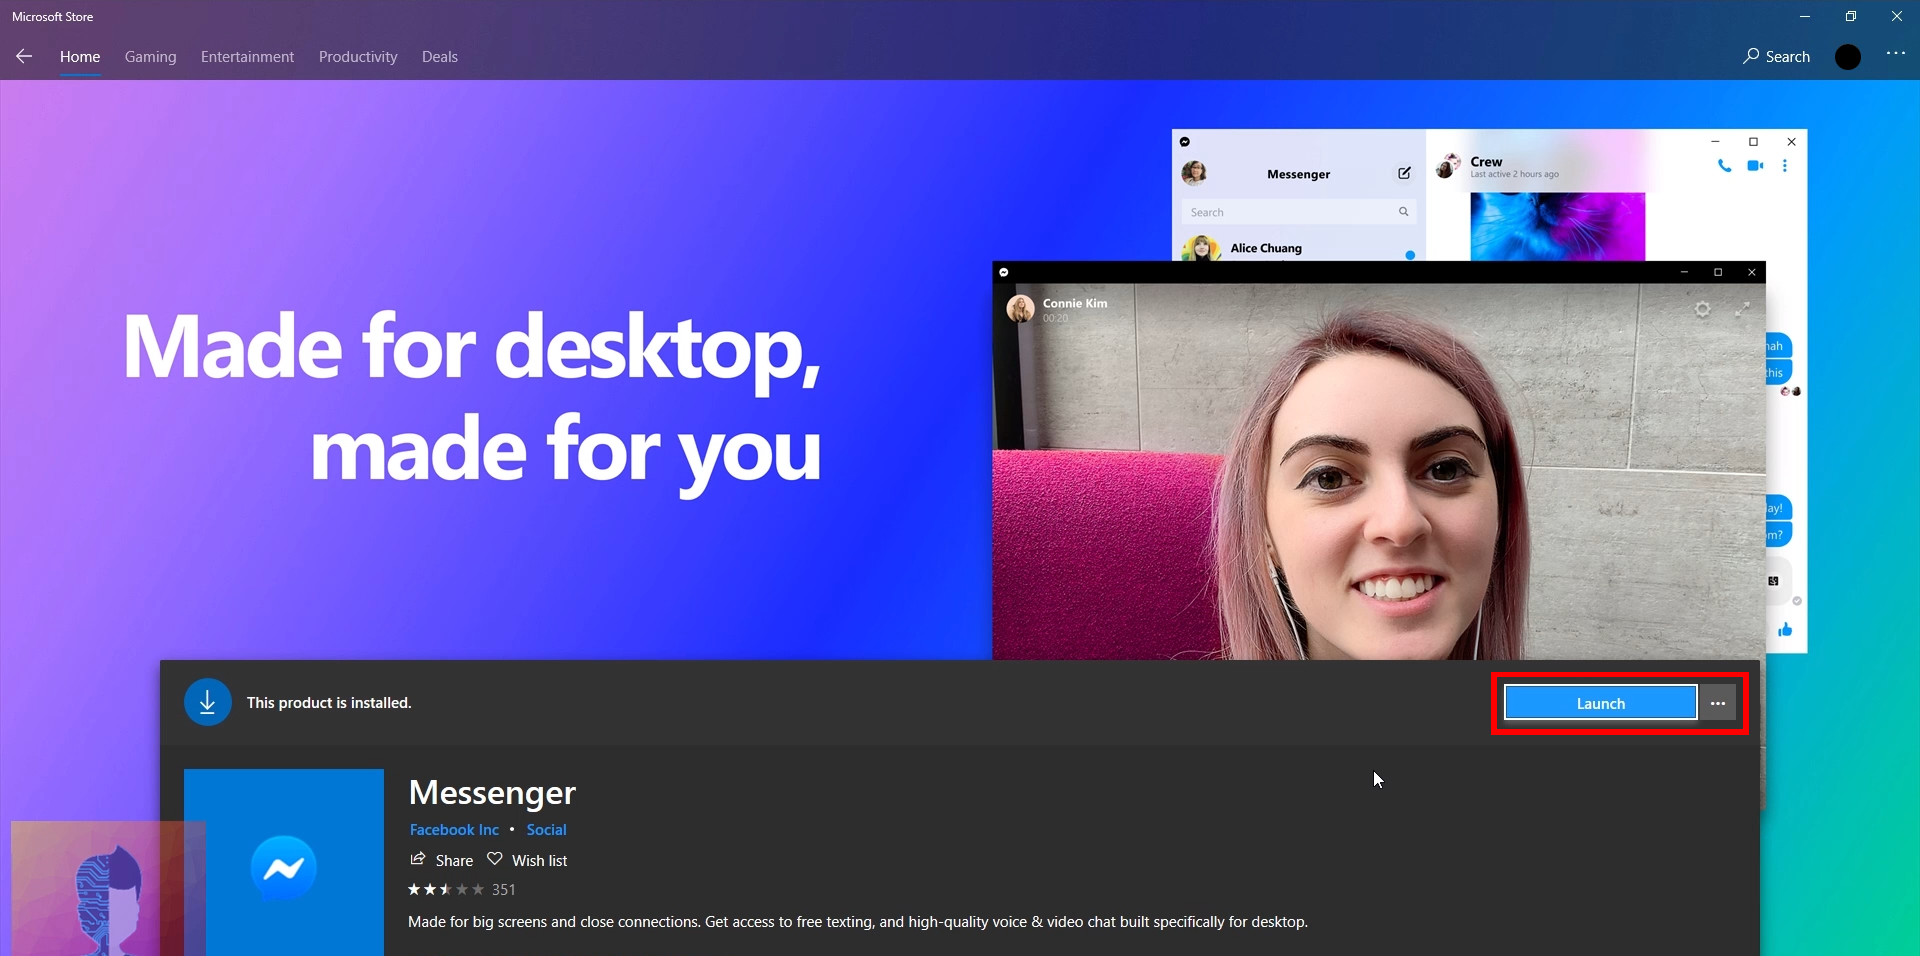 Facebook messenger on Desktop